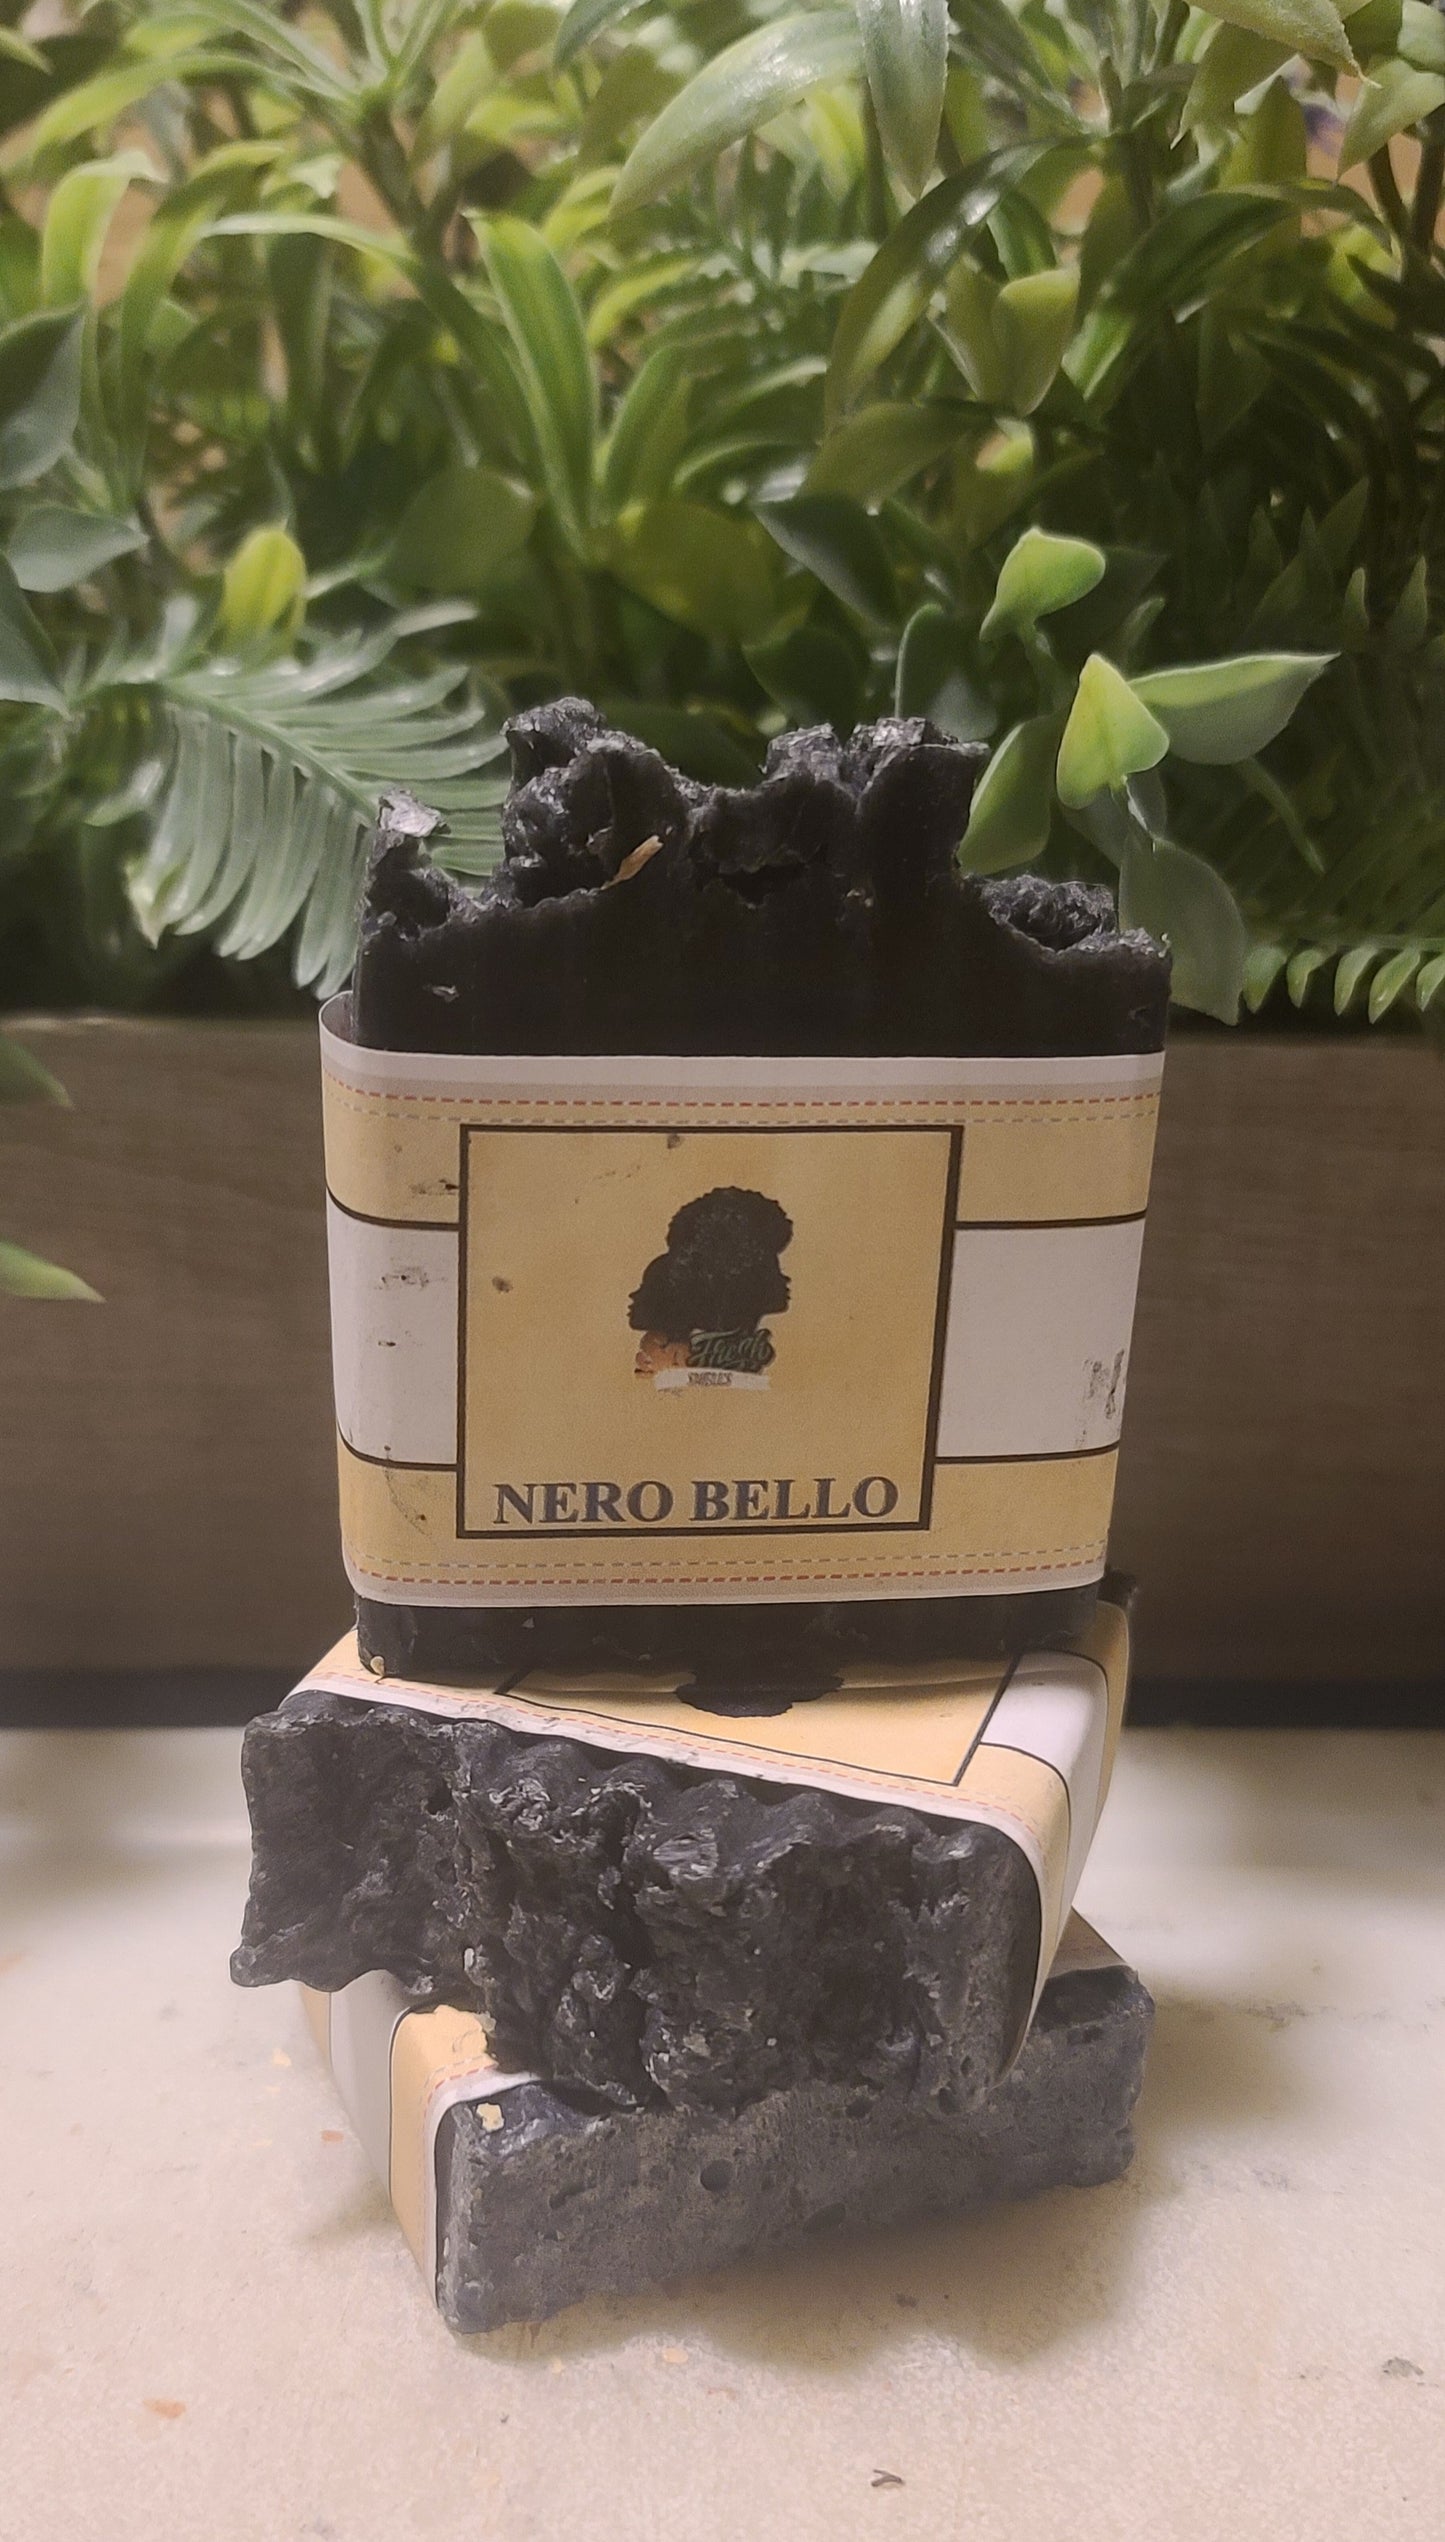 Nero Bello Men's Body Bar